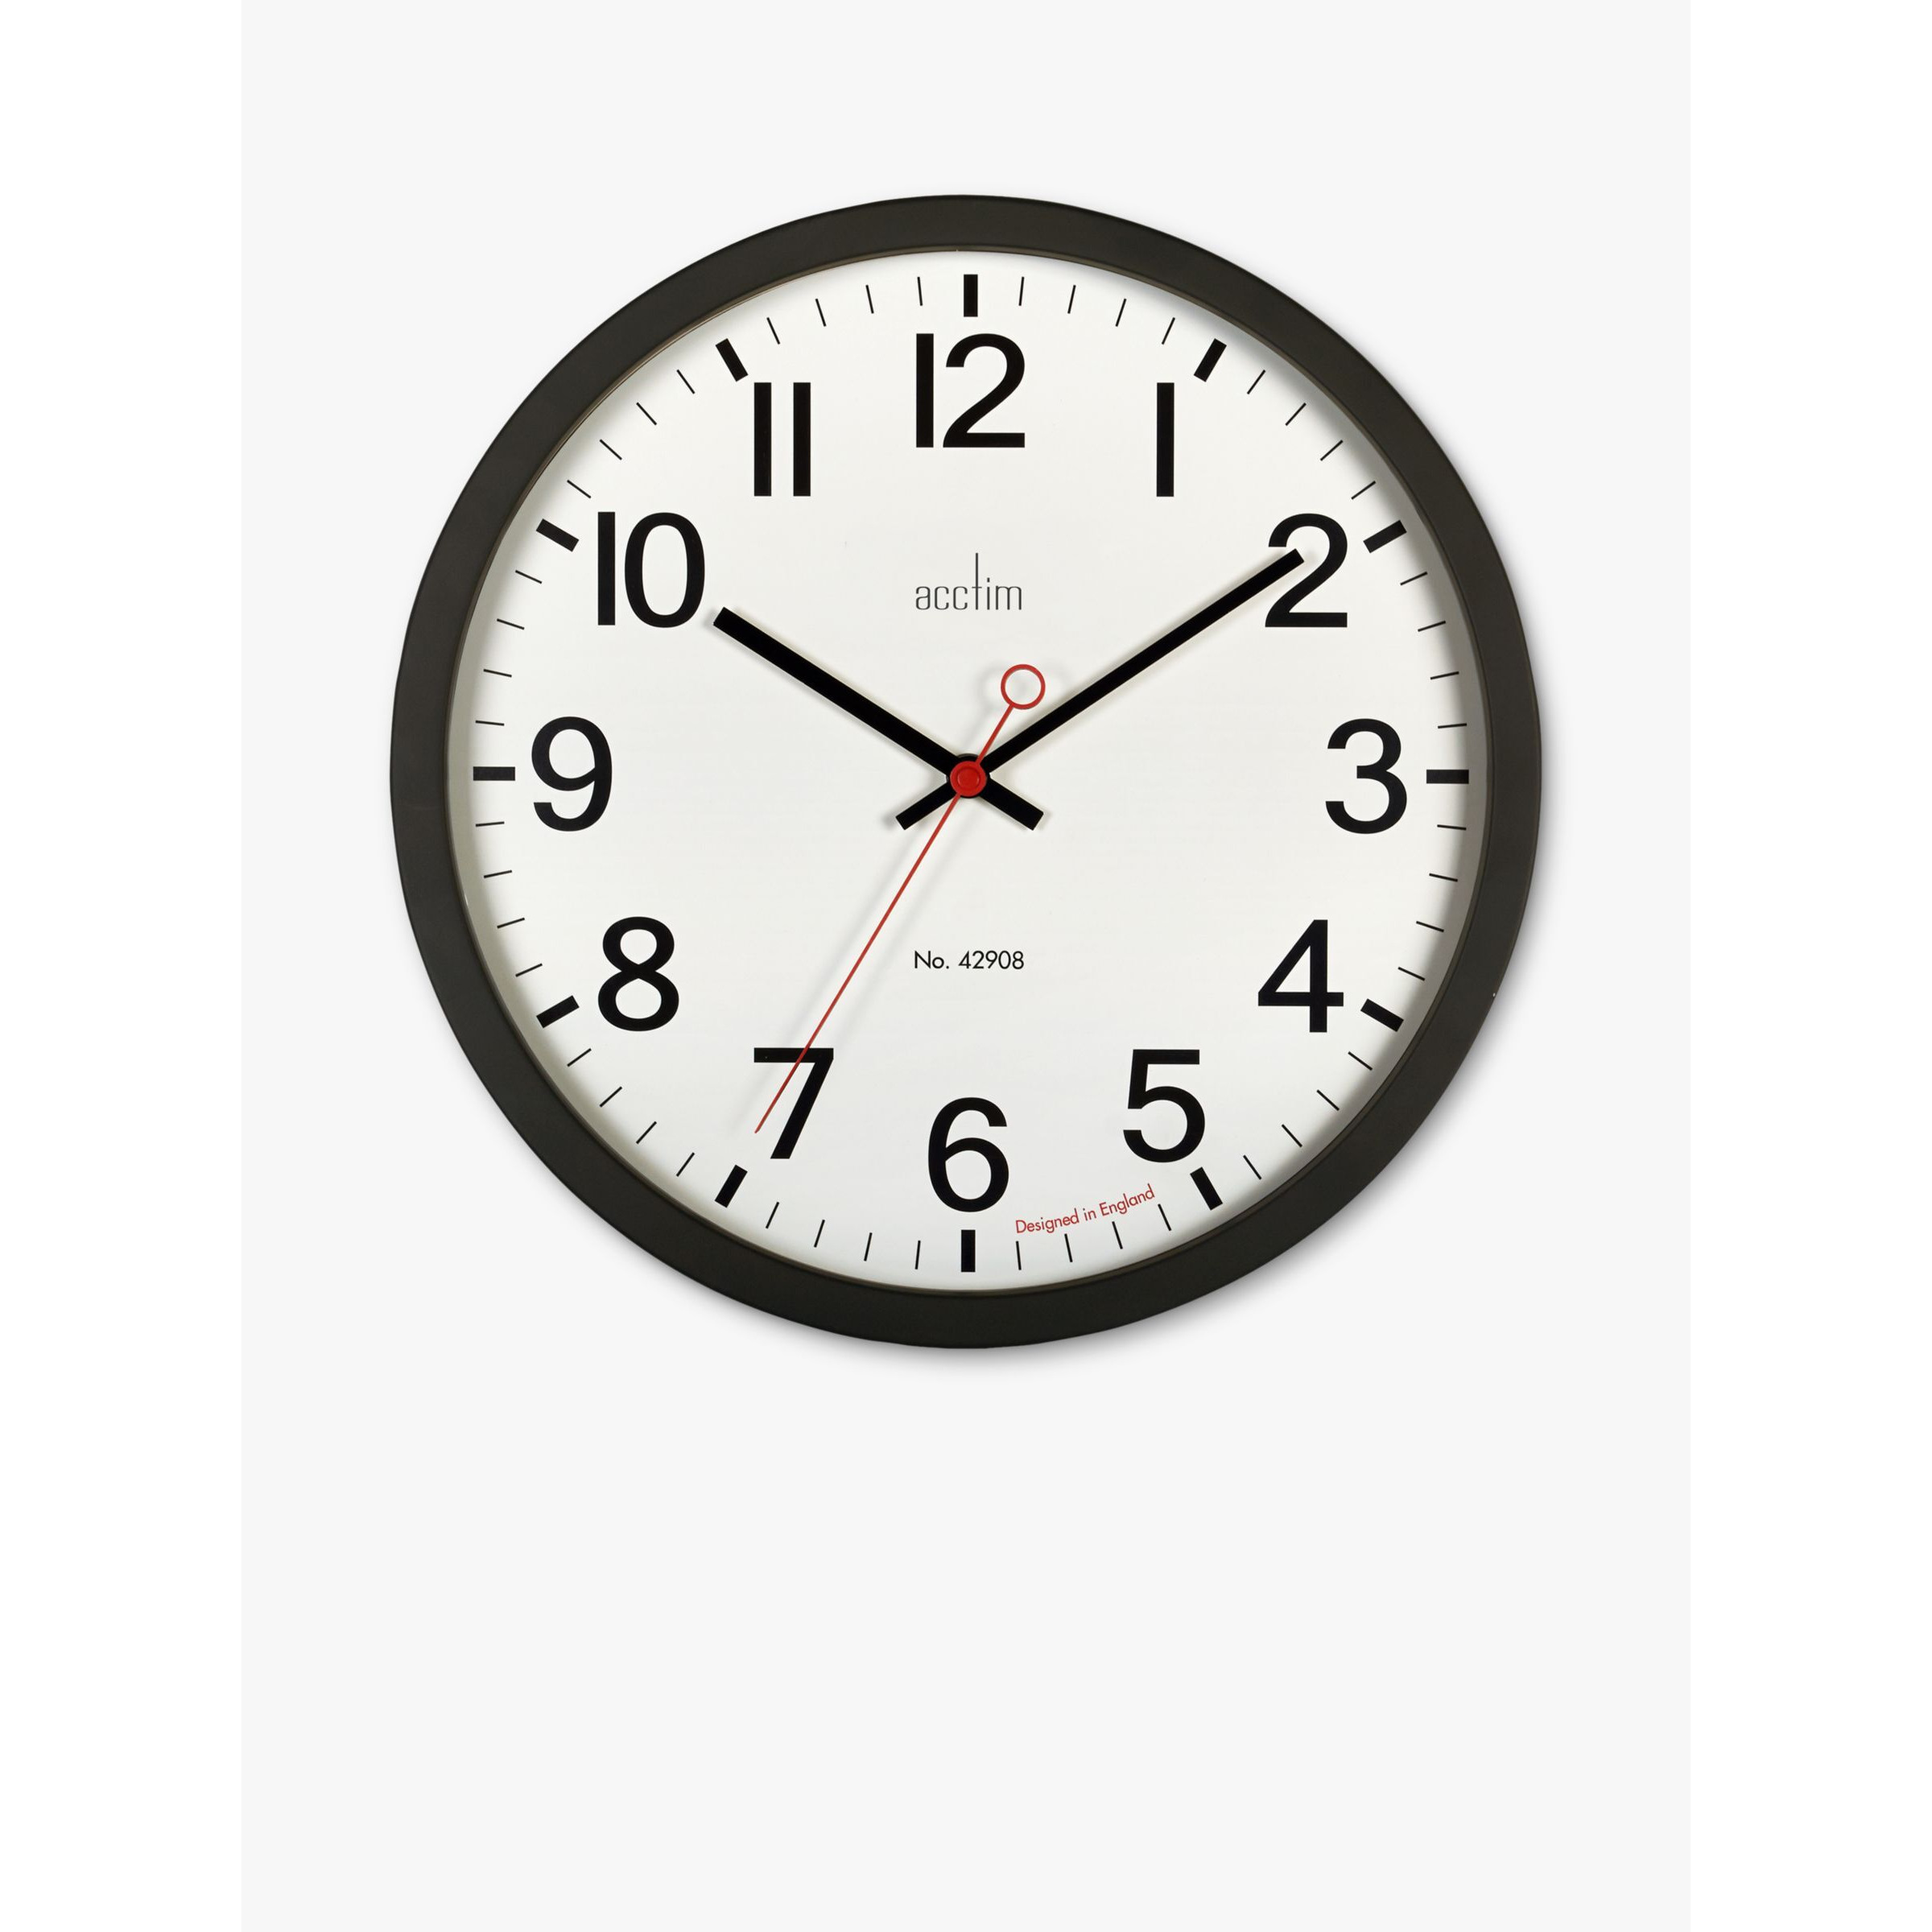 Acctim Kempston Analogue Wall Clock, 35cm, Black - image 1